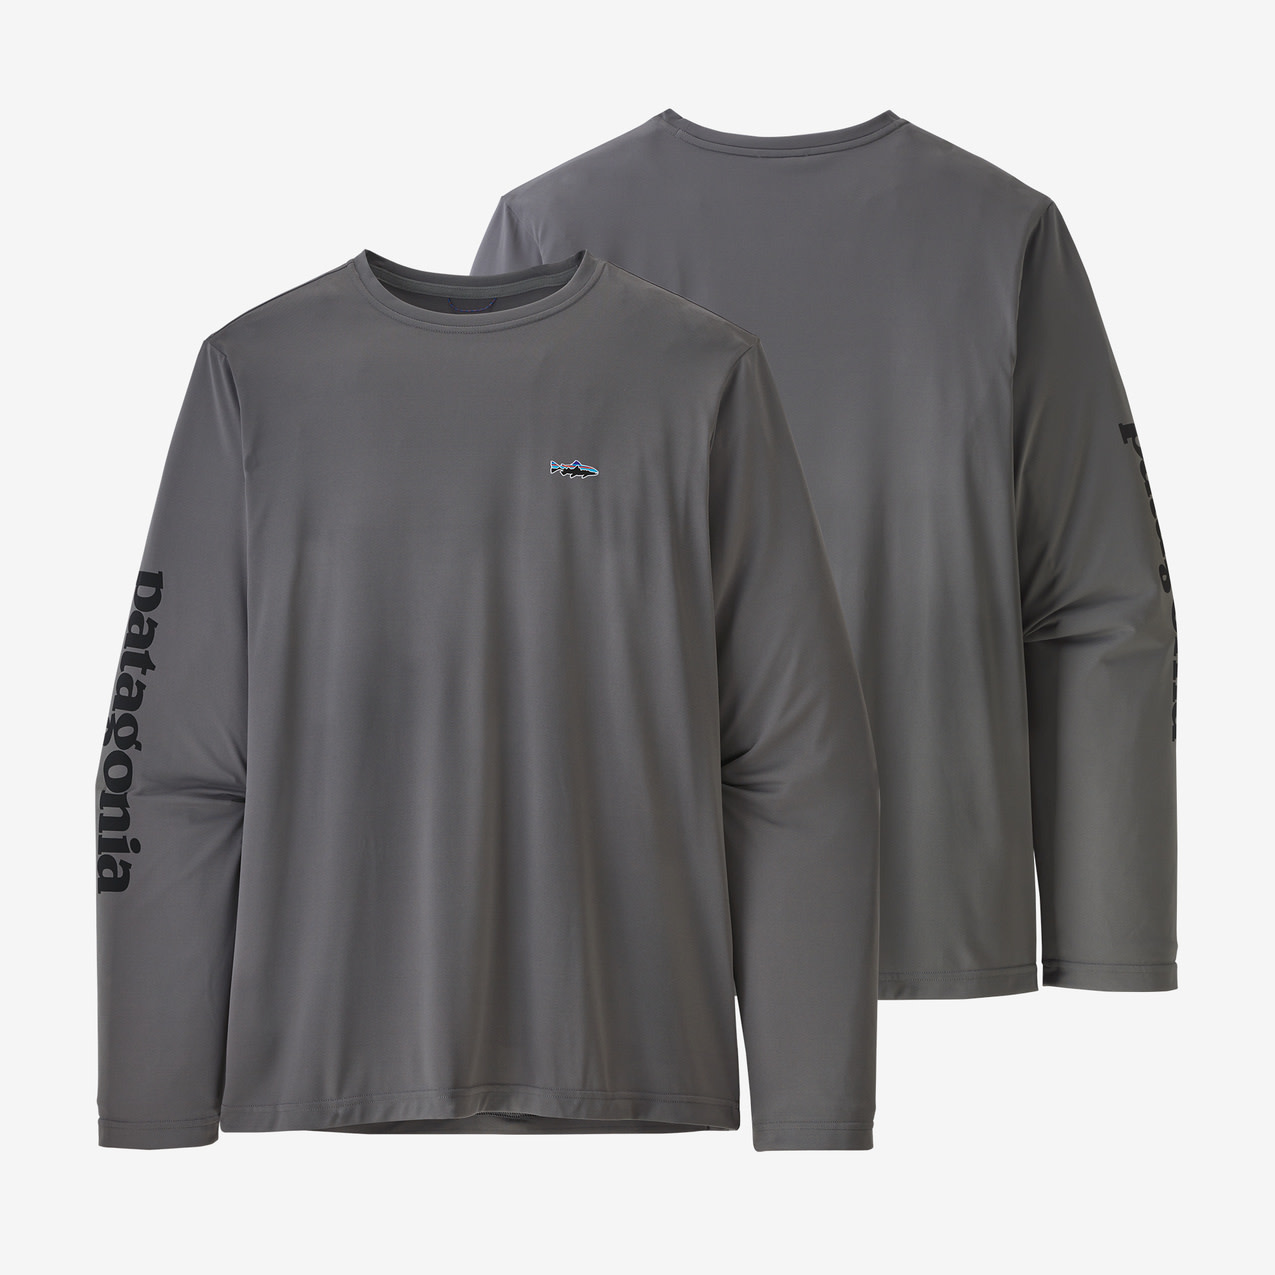 Patagonia Men's Go To Shirt Premium fly fishing shirts, pant